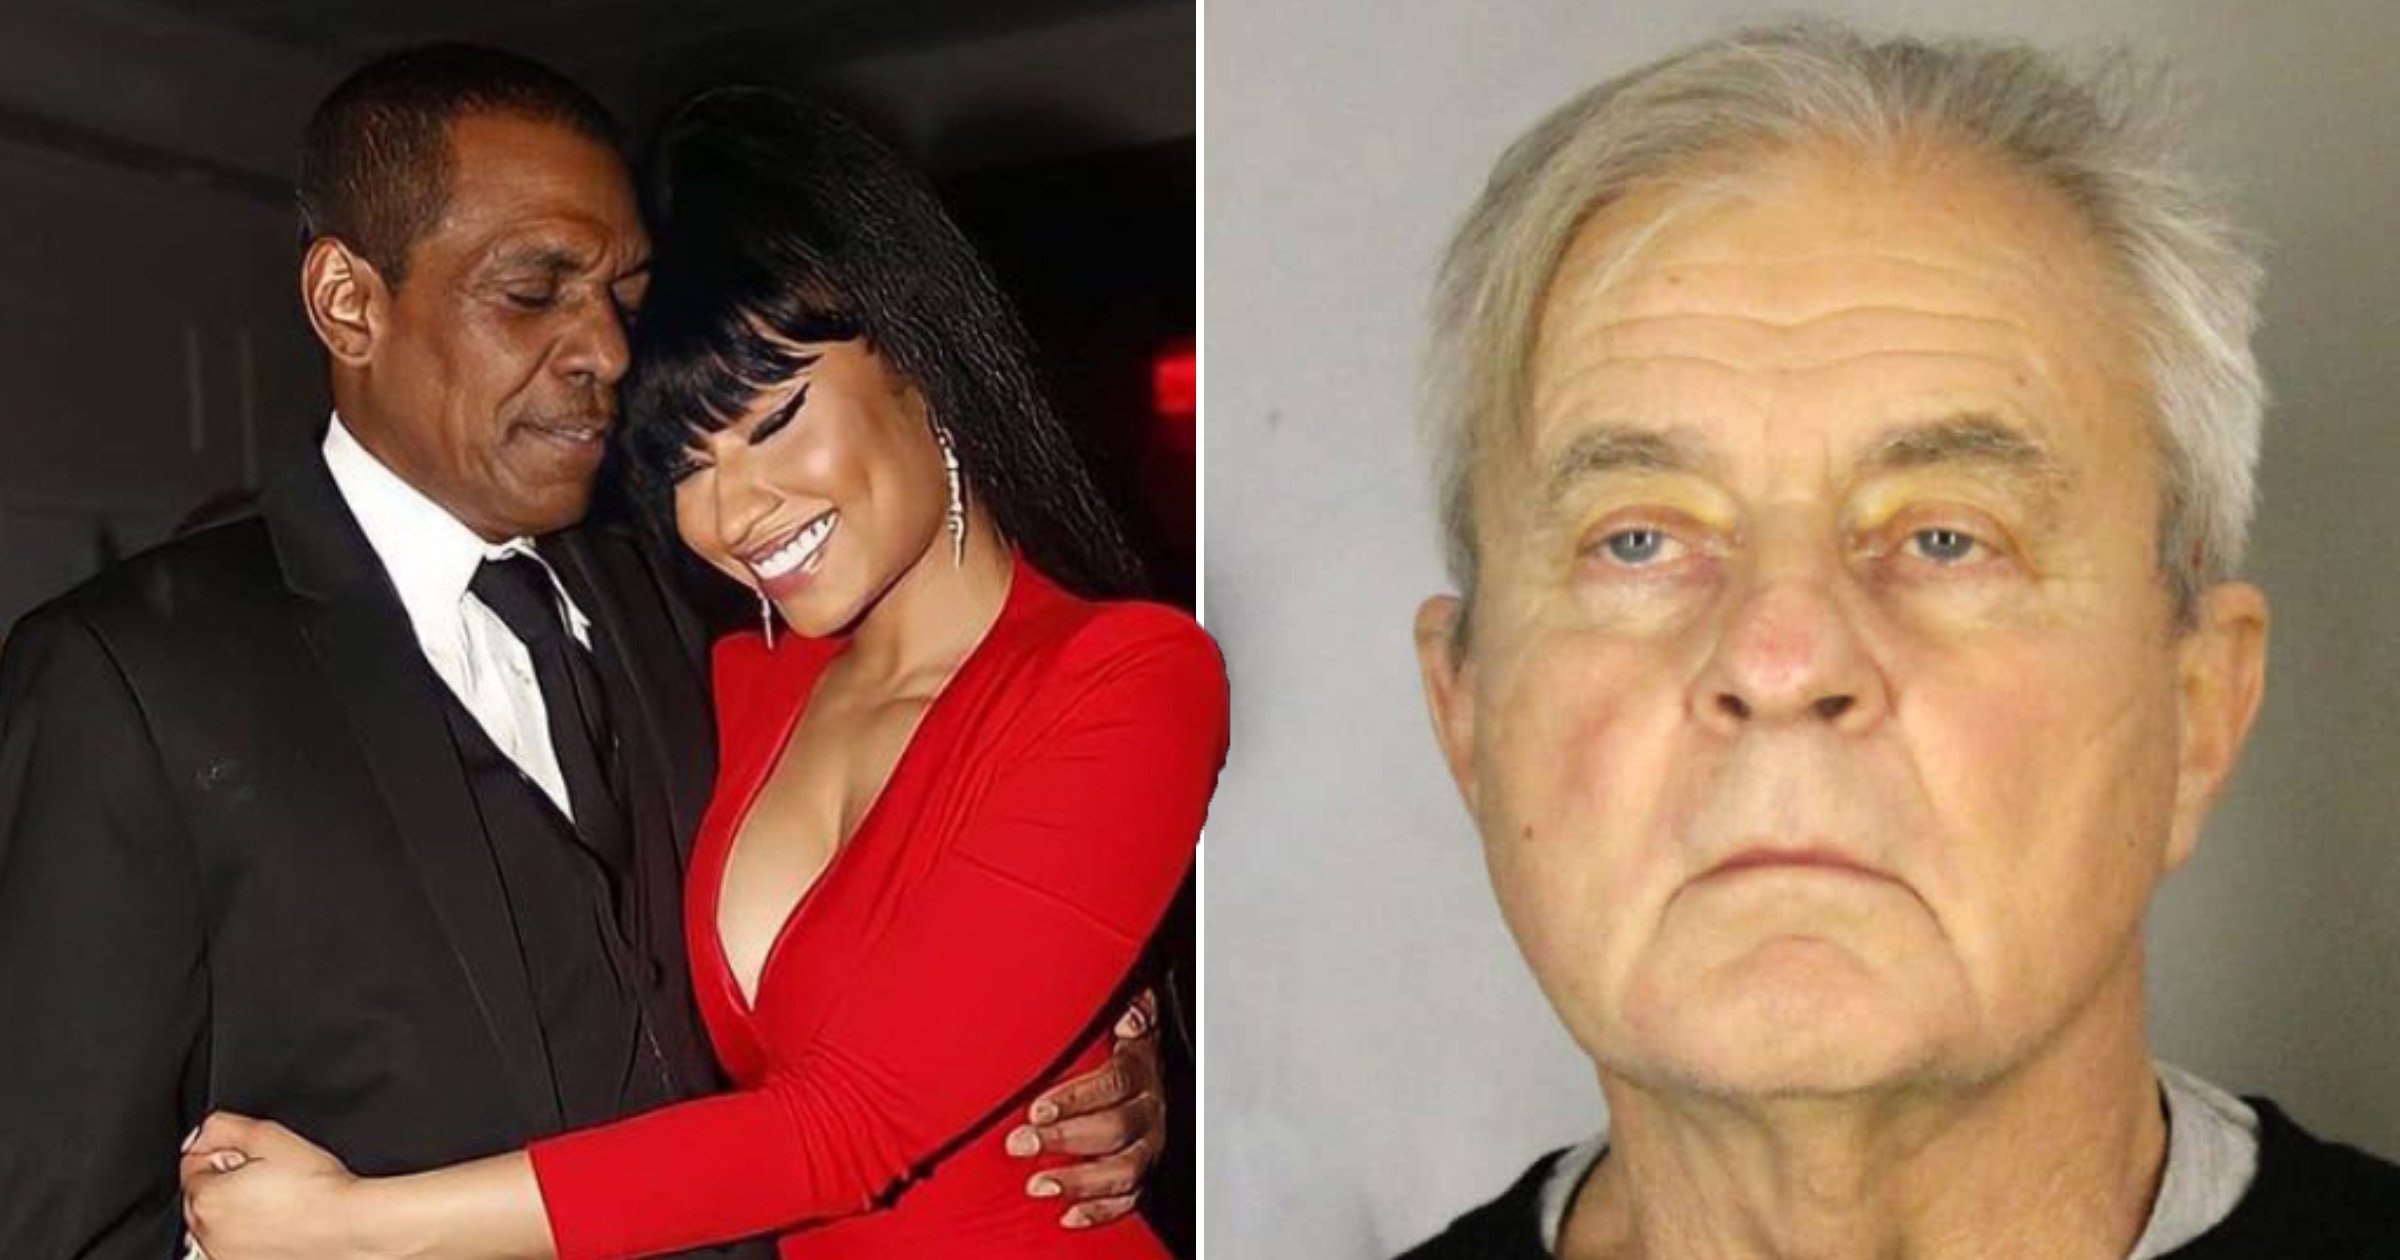 Man who killed Nicki Minaj’s father sentenced to 1 year in prison